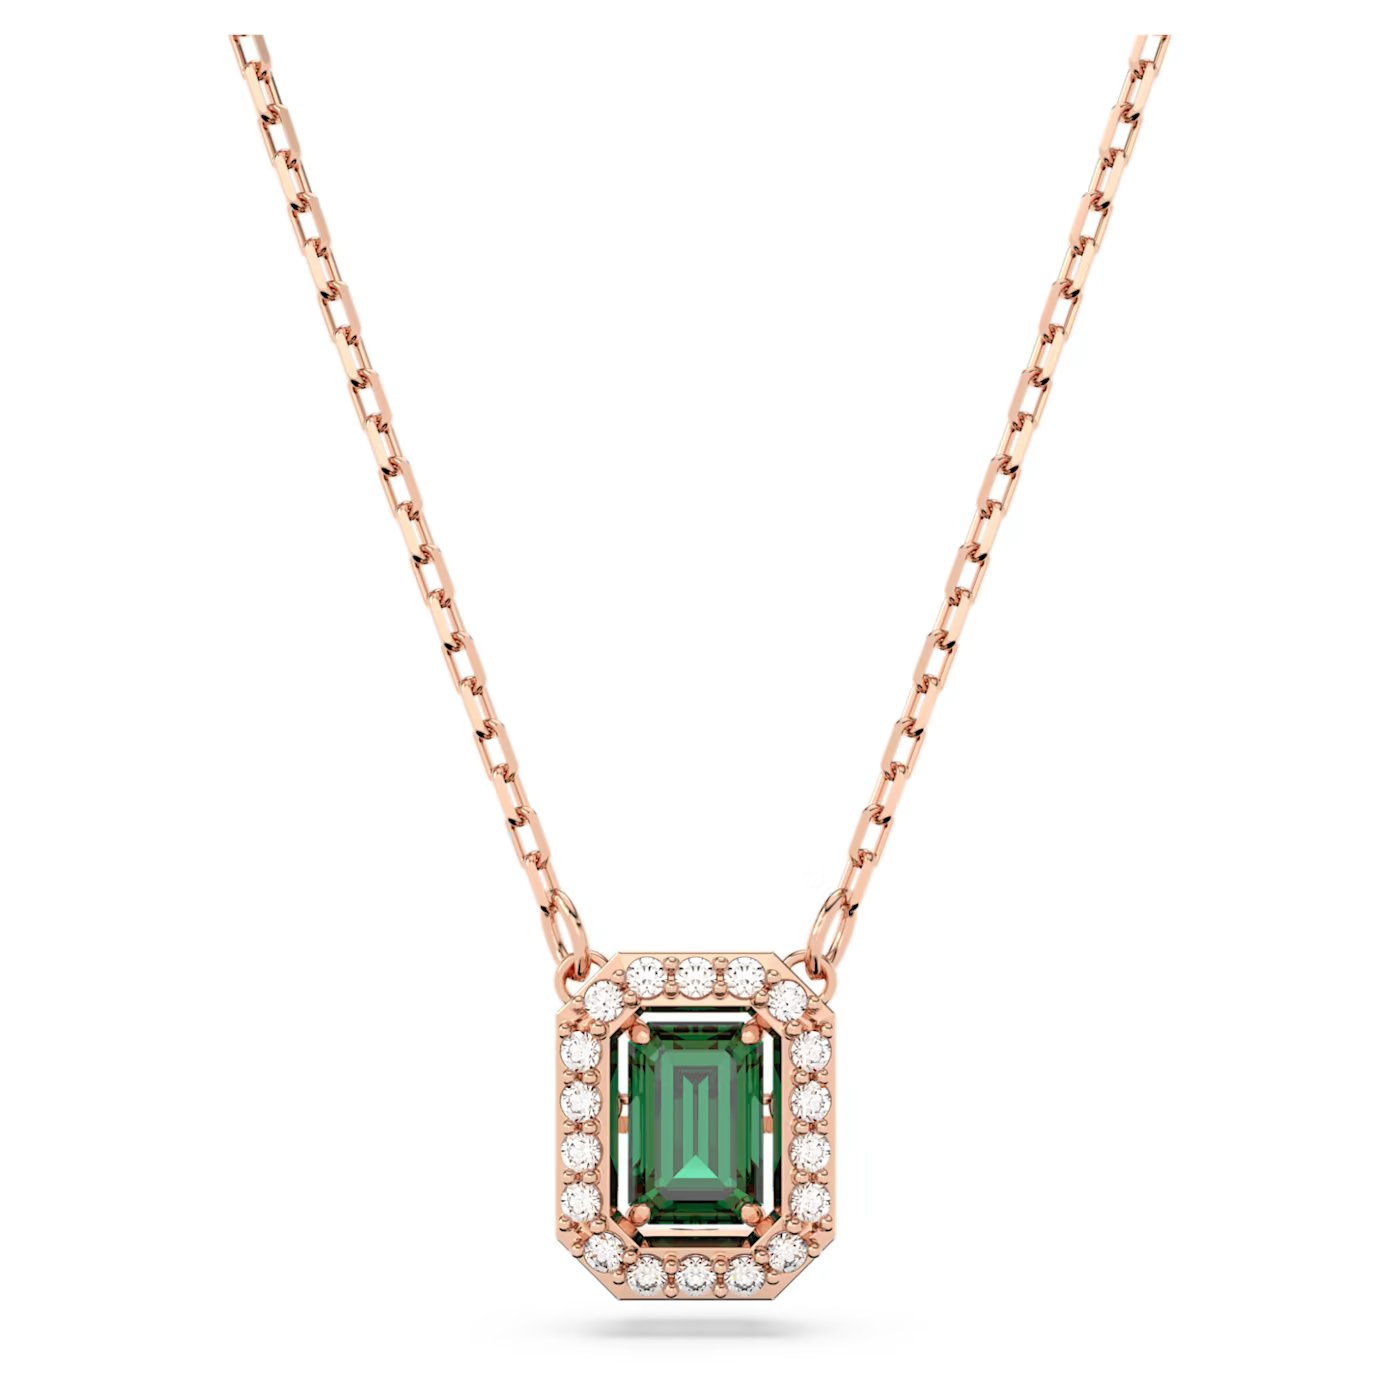 64aedc5637f91_millenia-necklace--octagon-cut--green--rose-gold-tone-plated-swarovski-5650069.jpg